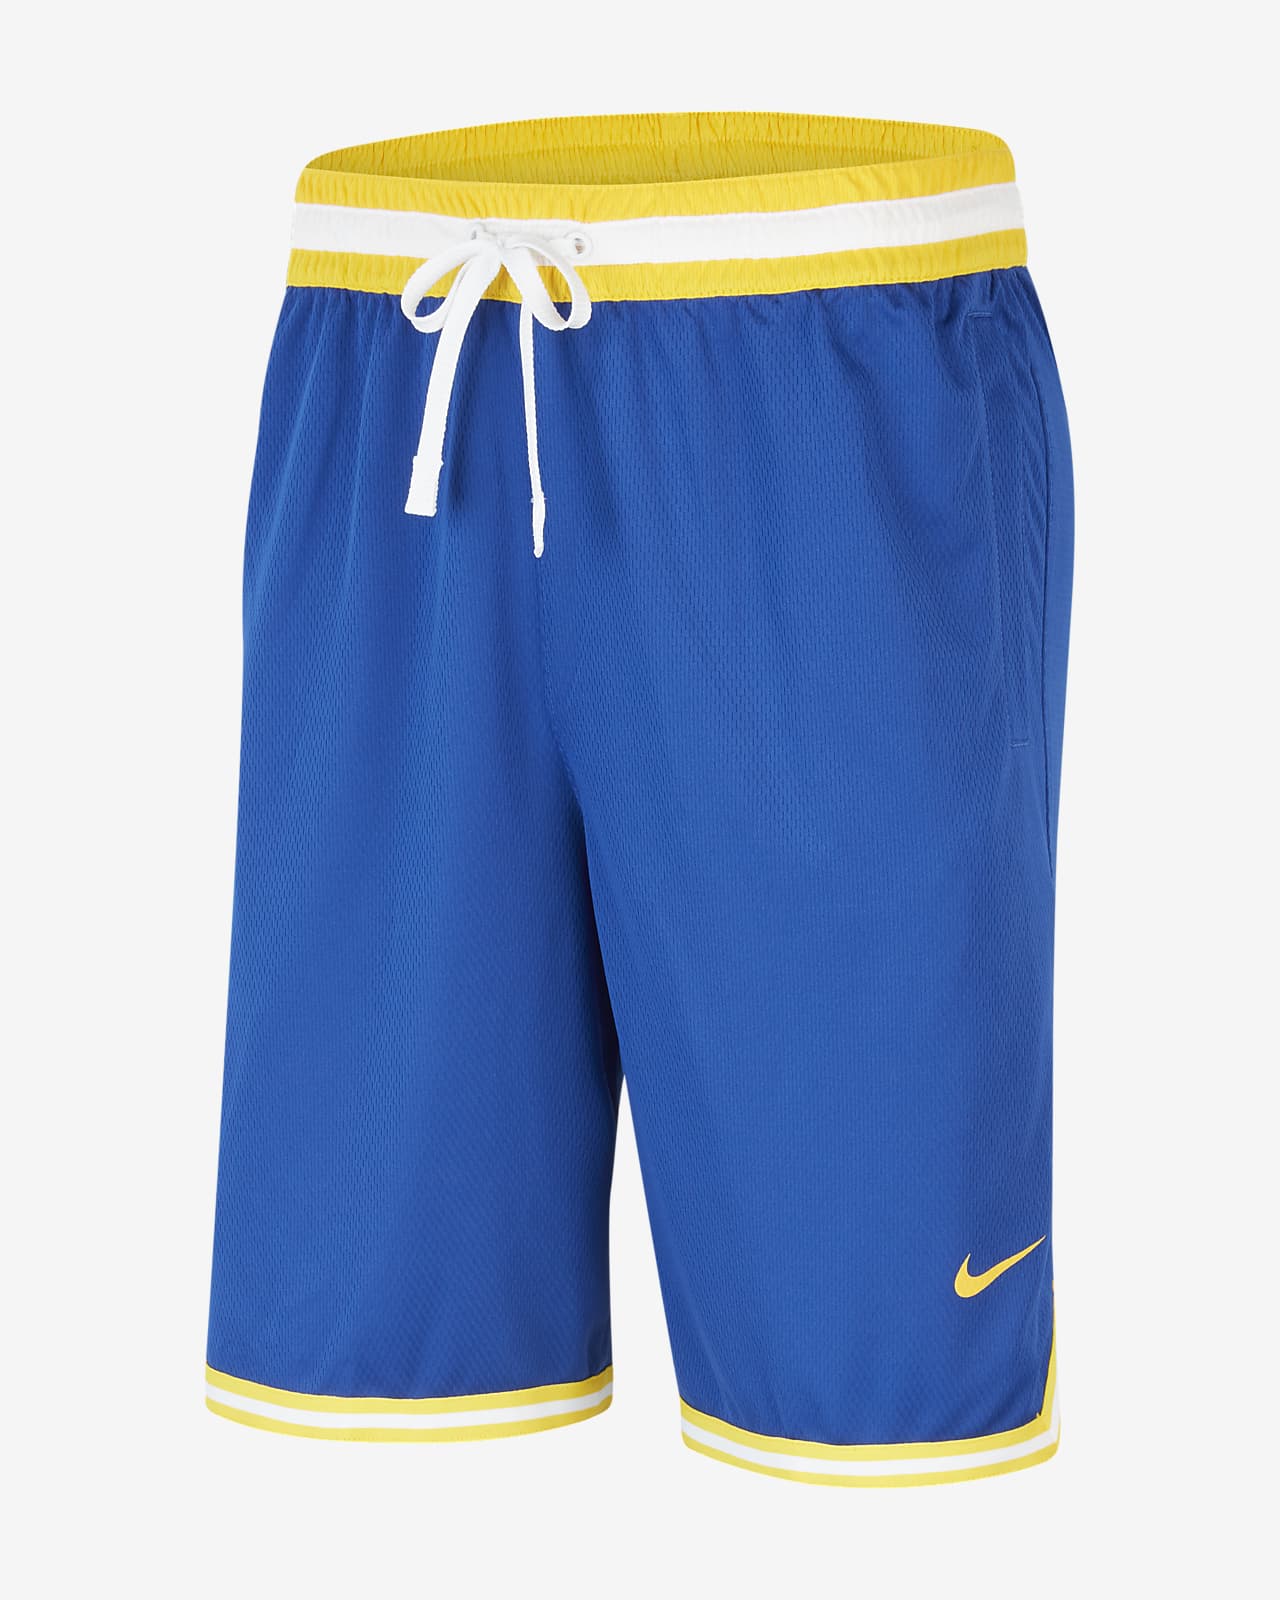 Buy > nike warriors shorts > in stock